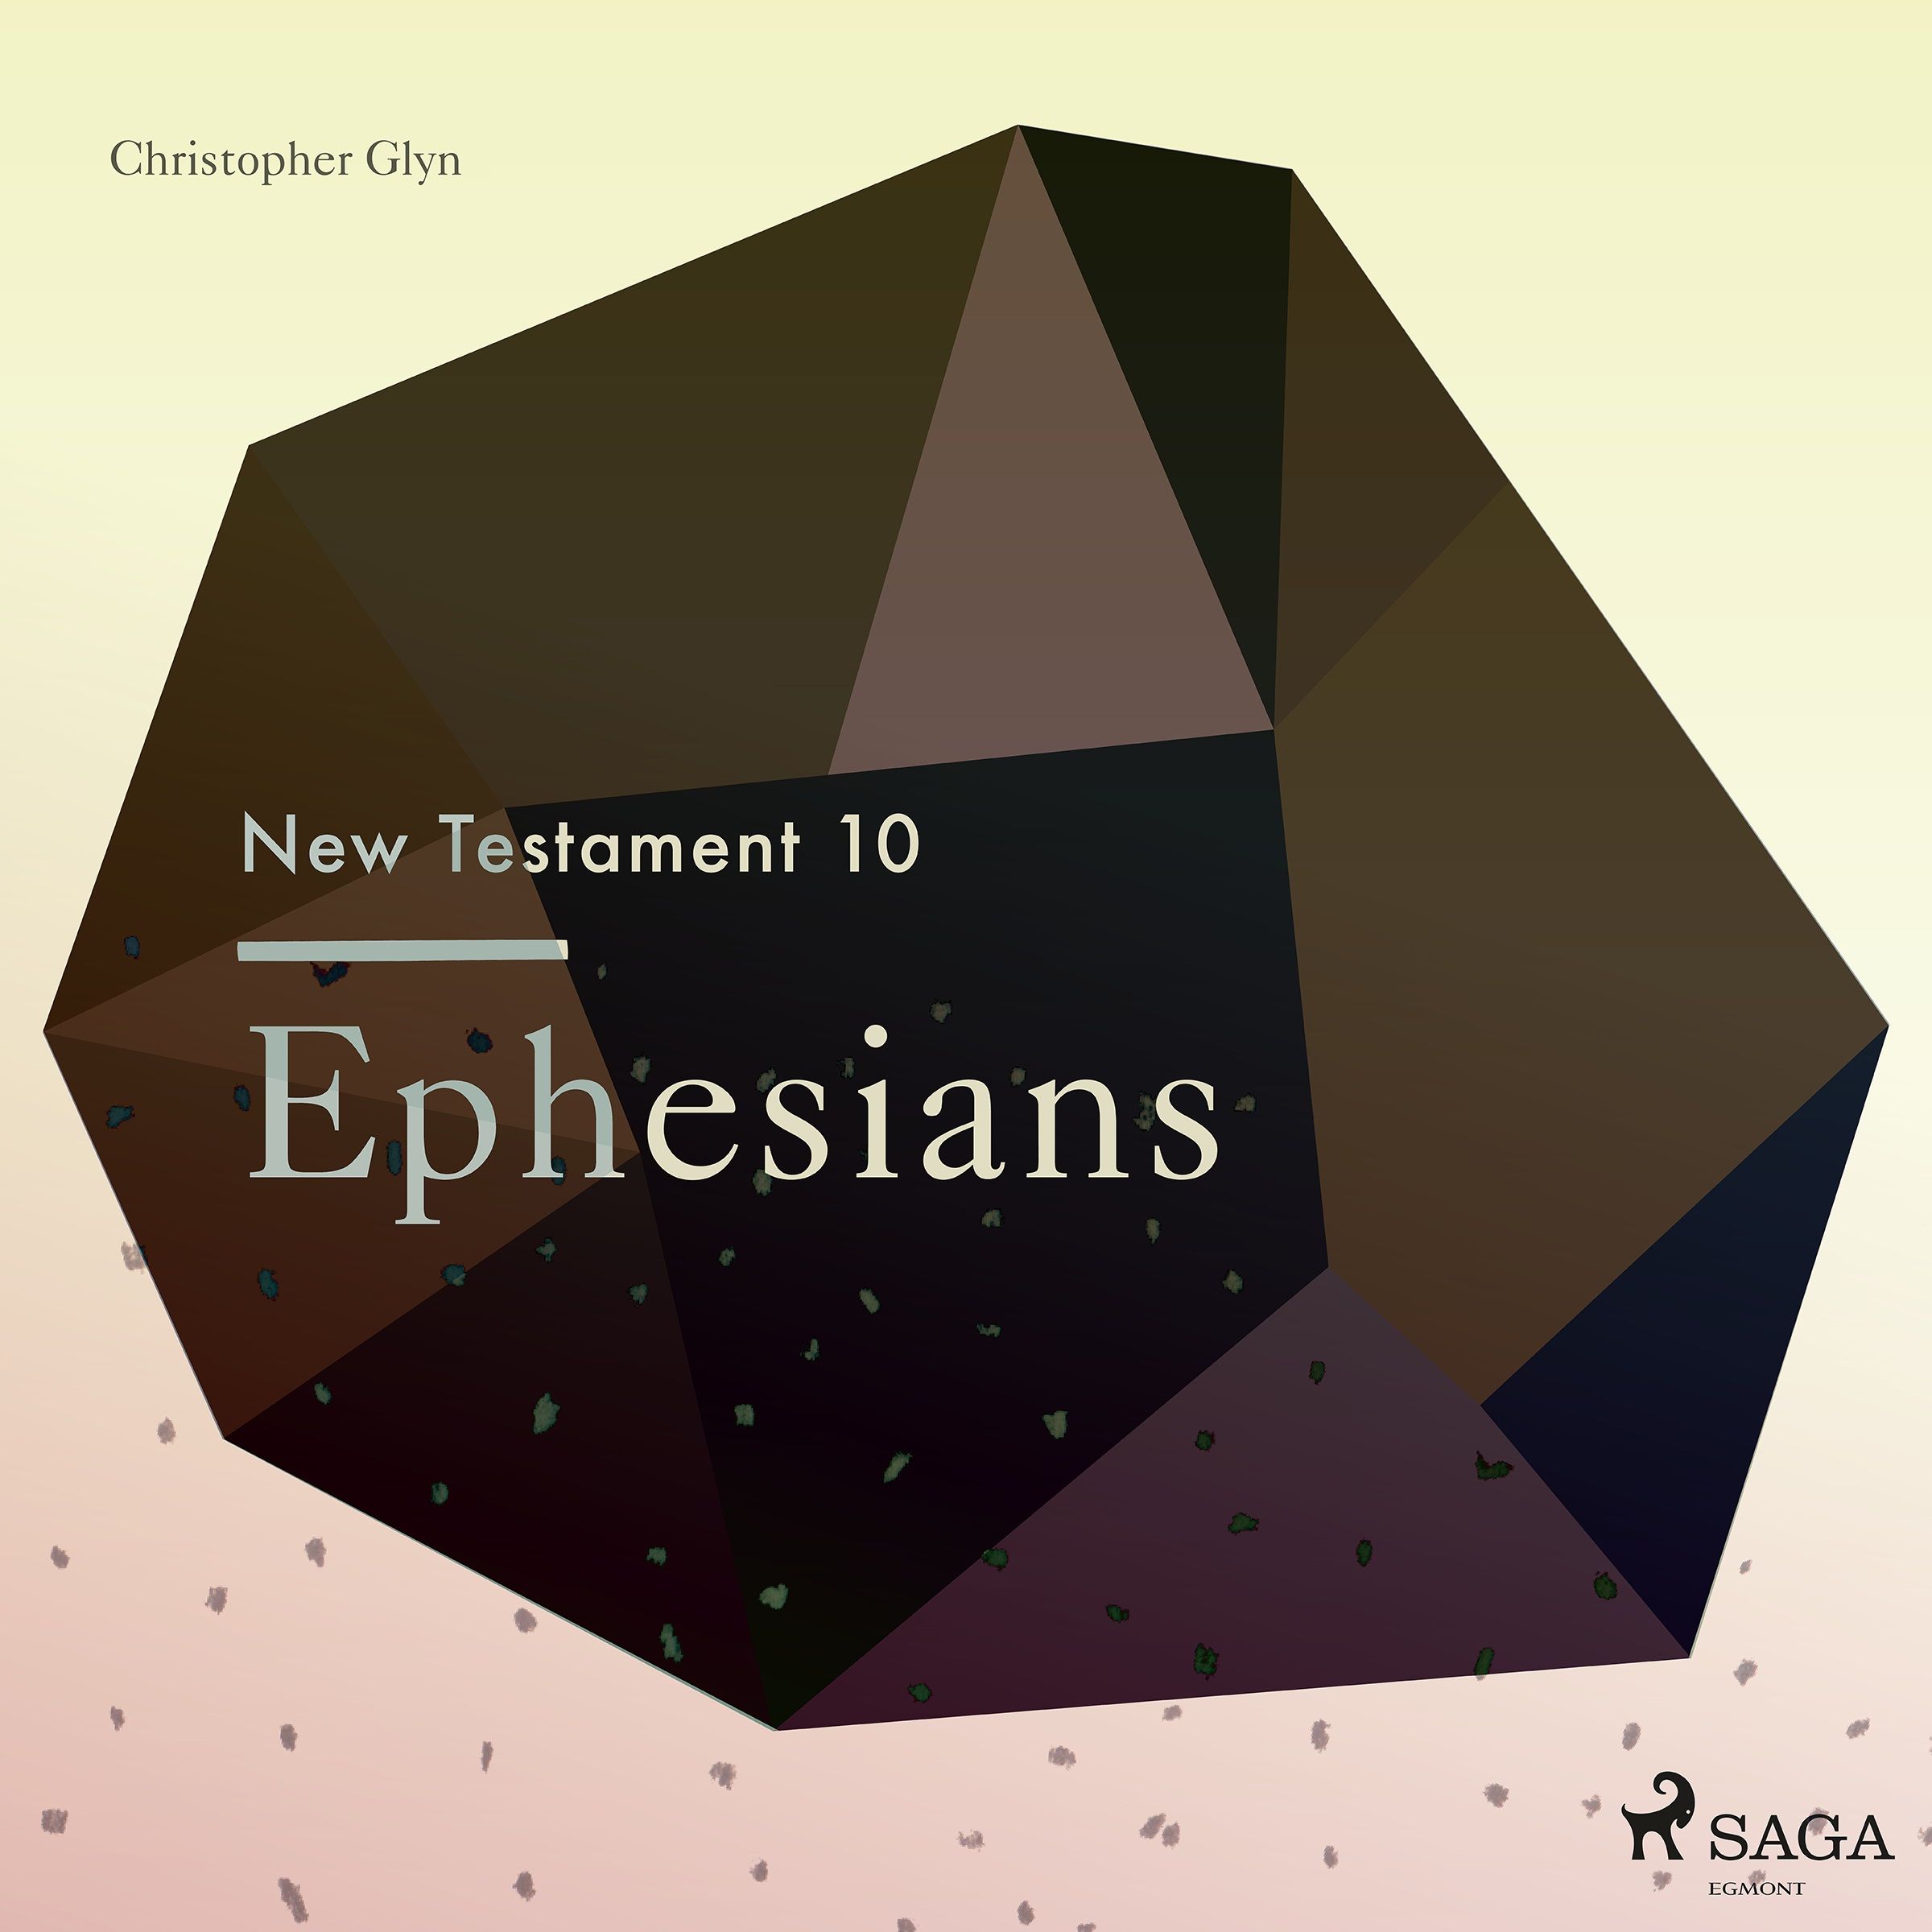 The New Testament 10 - Ephesians, lydbog af Christopher Glyn